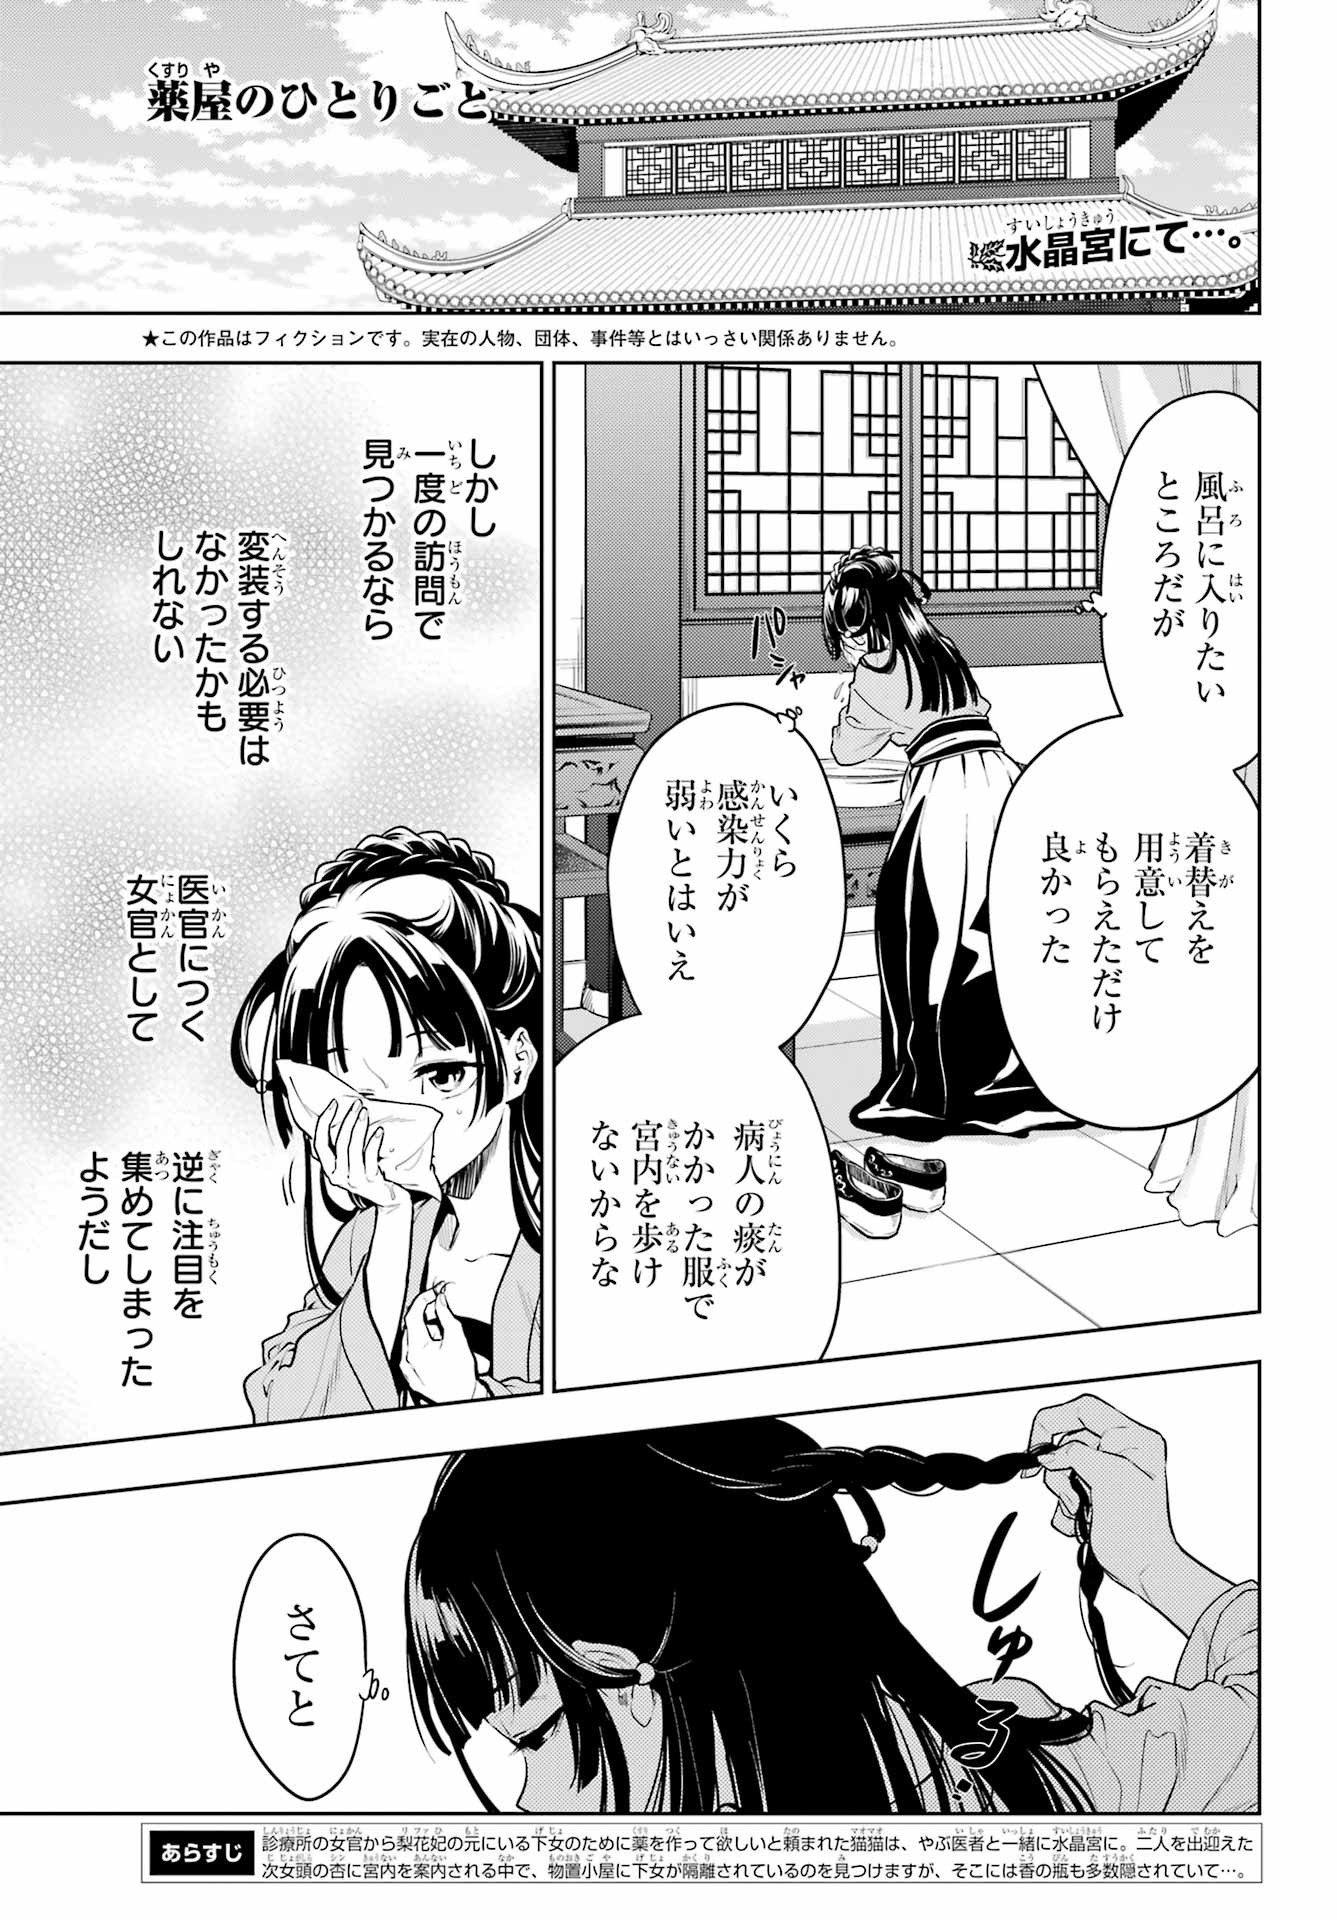 Kusuriya no Hitorigoto - Chapter 52 - Page 2